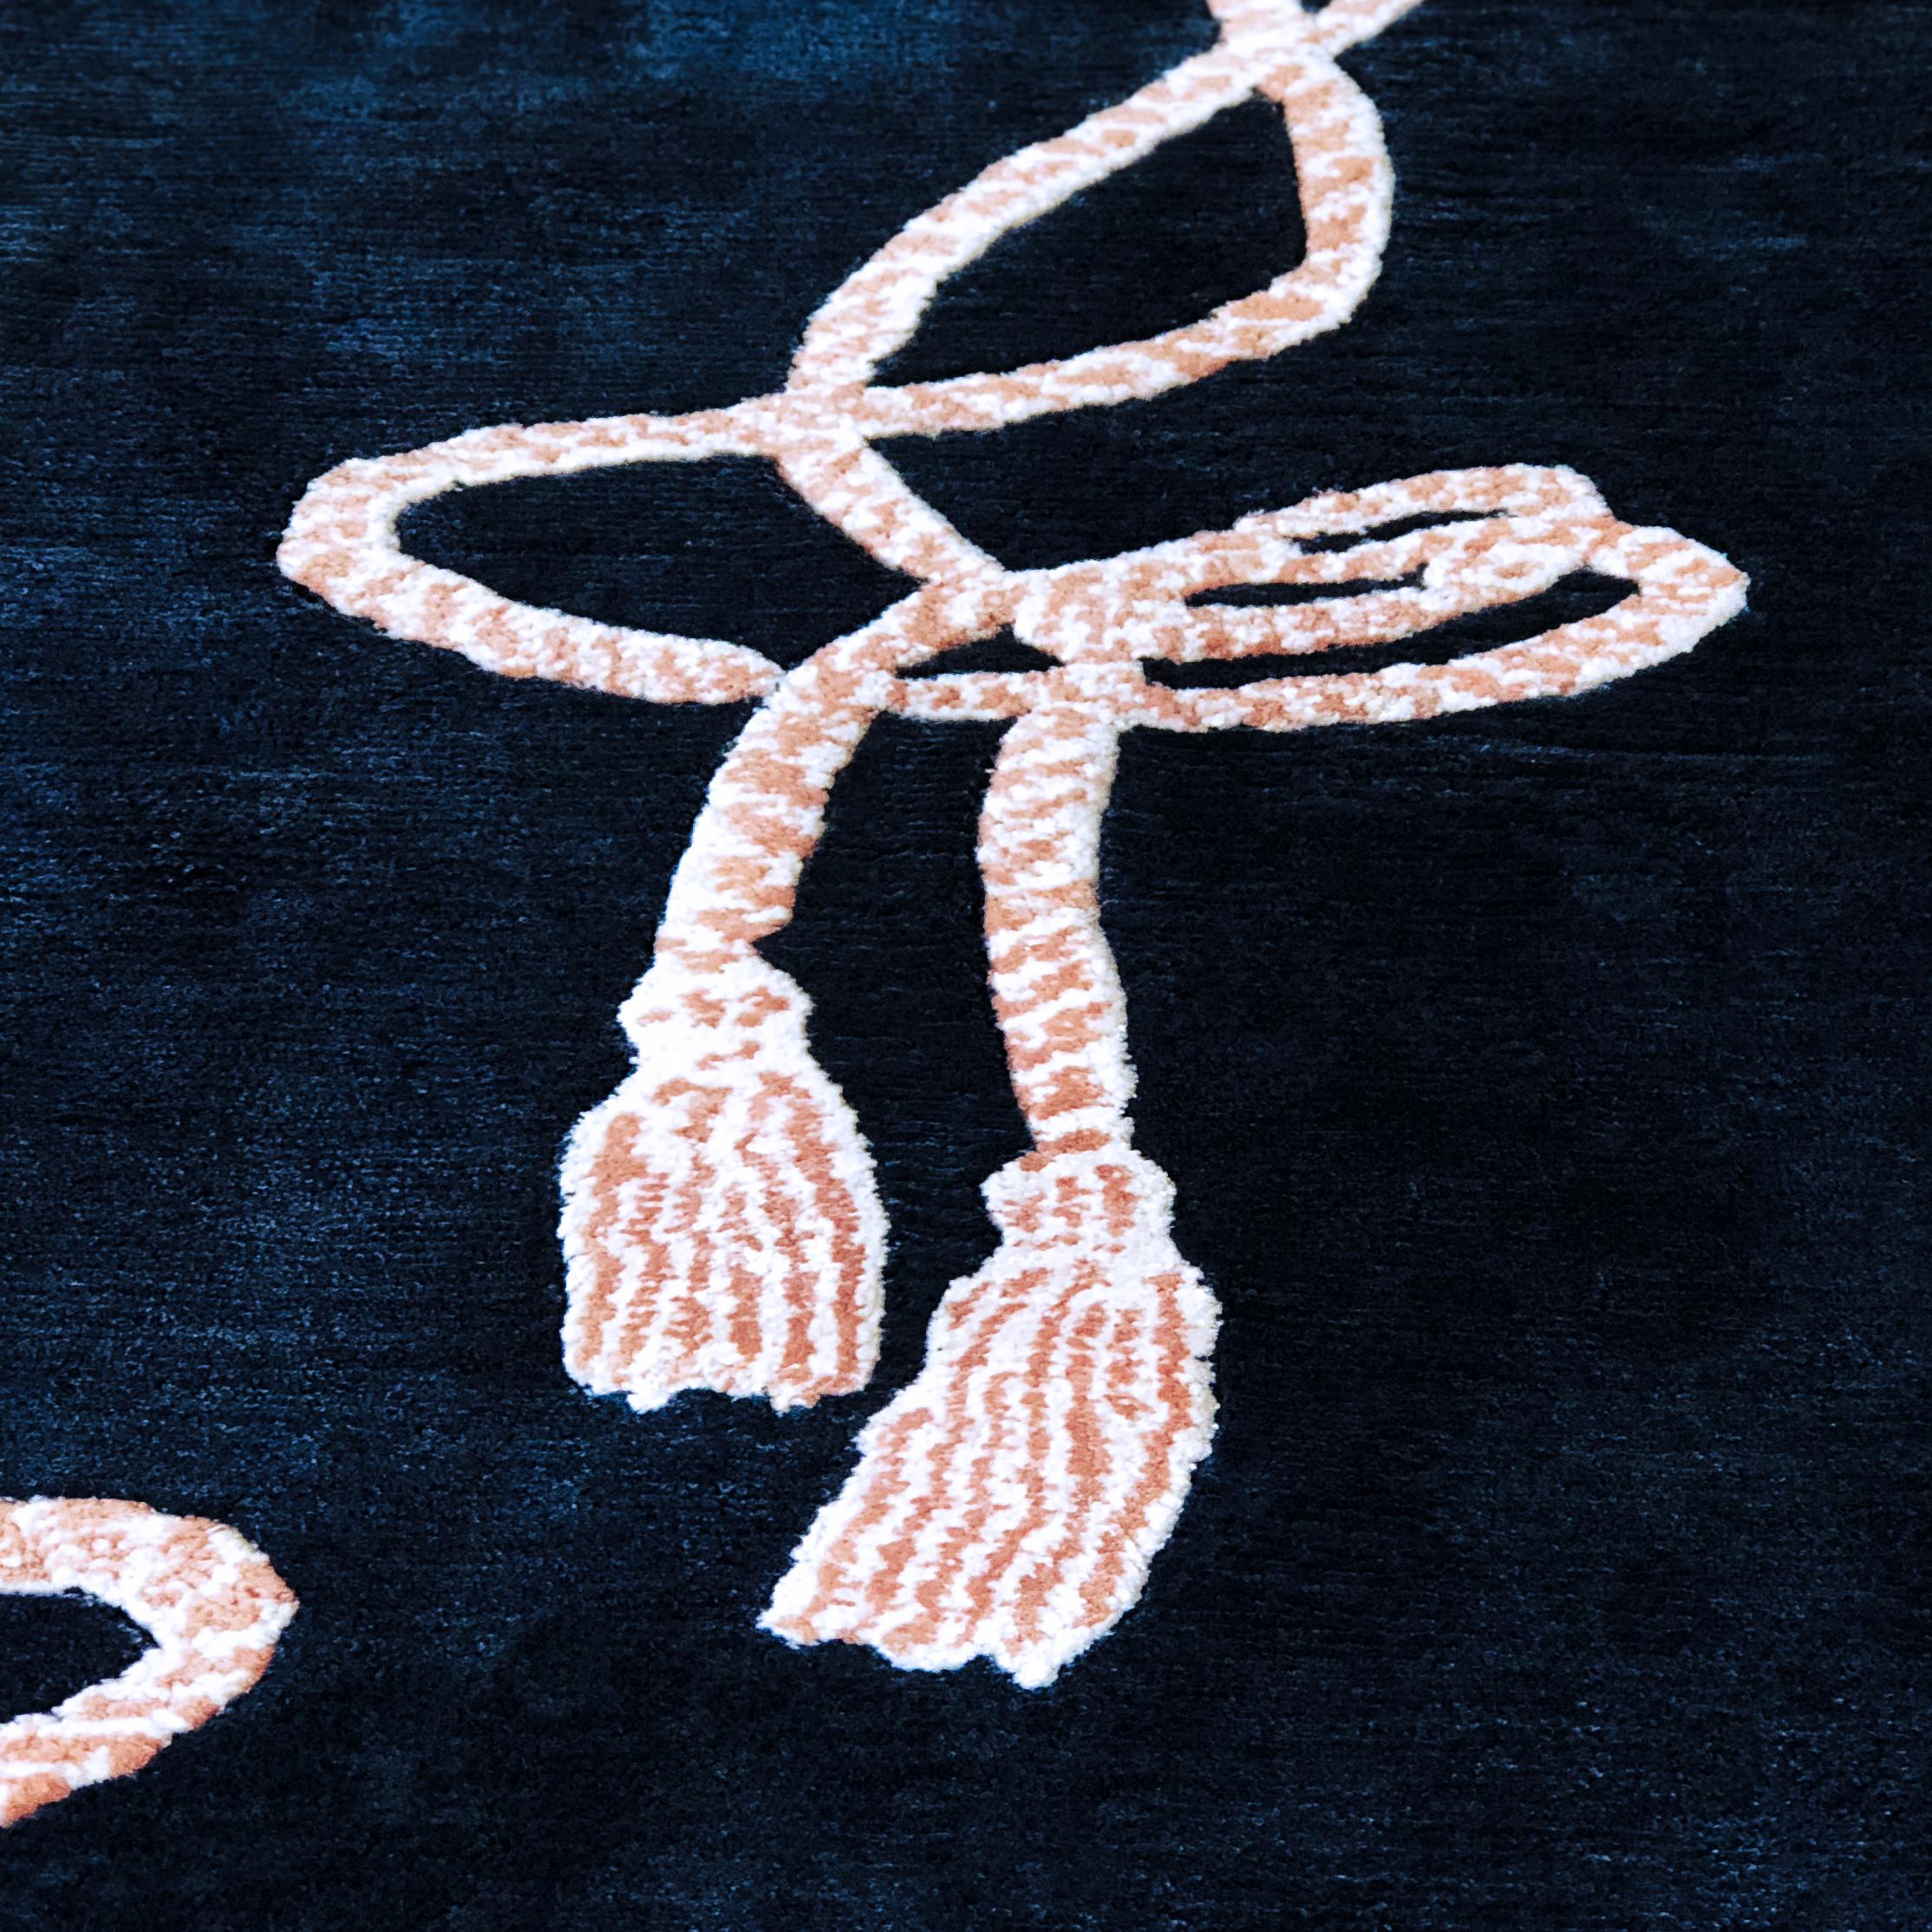 Braids Hand-Knotted Designer Rug by Ekaterina Elizarova

Introducing Braids, an exquisite hand-knotted designer rug by the esteemed Russian interior and furniture designer, Ekaterina Elizarova. Inspired by the elegant ballet dancer's braids, this